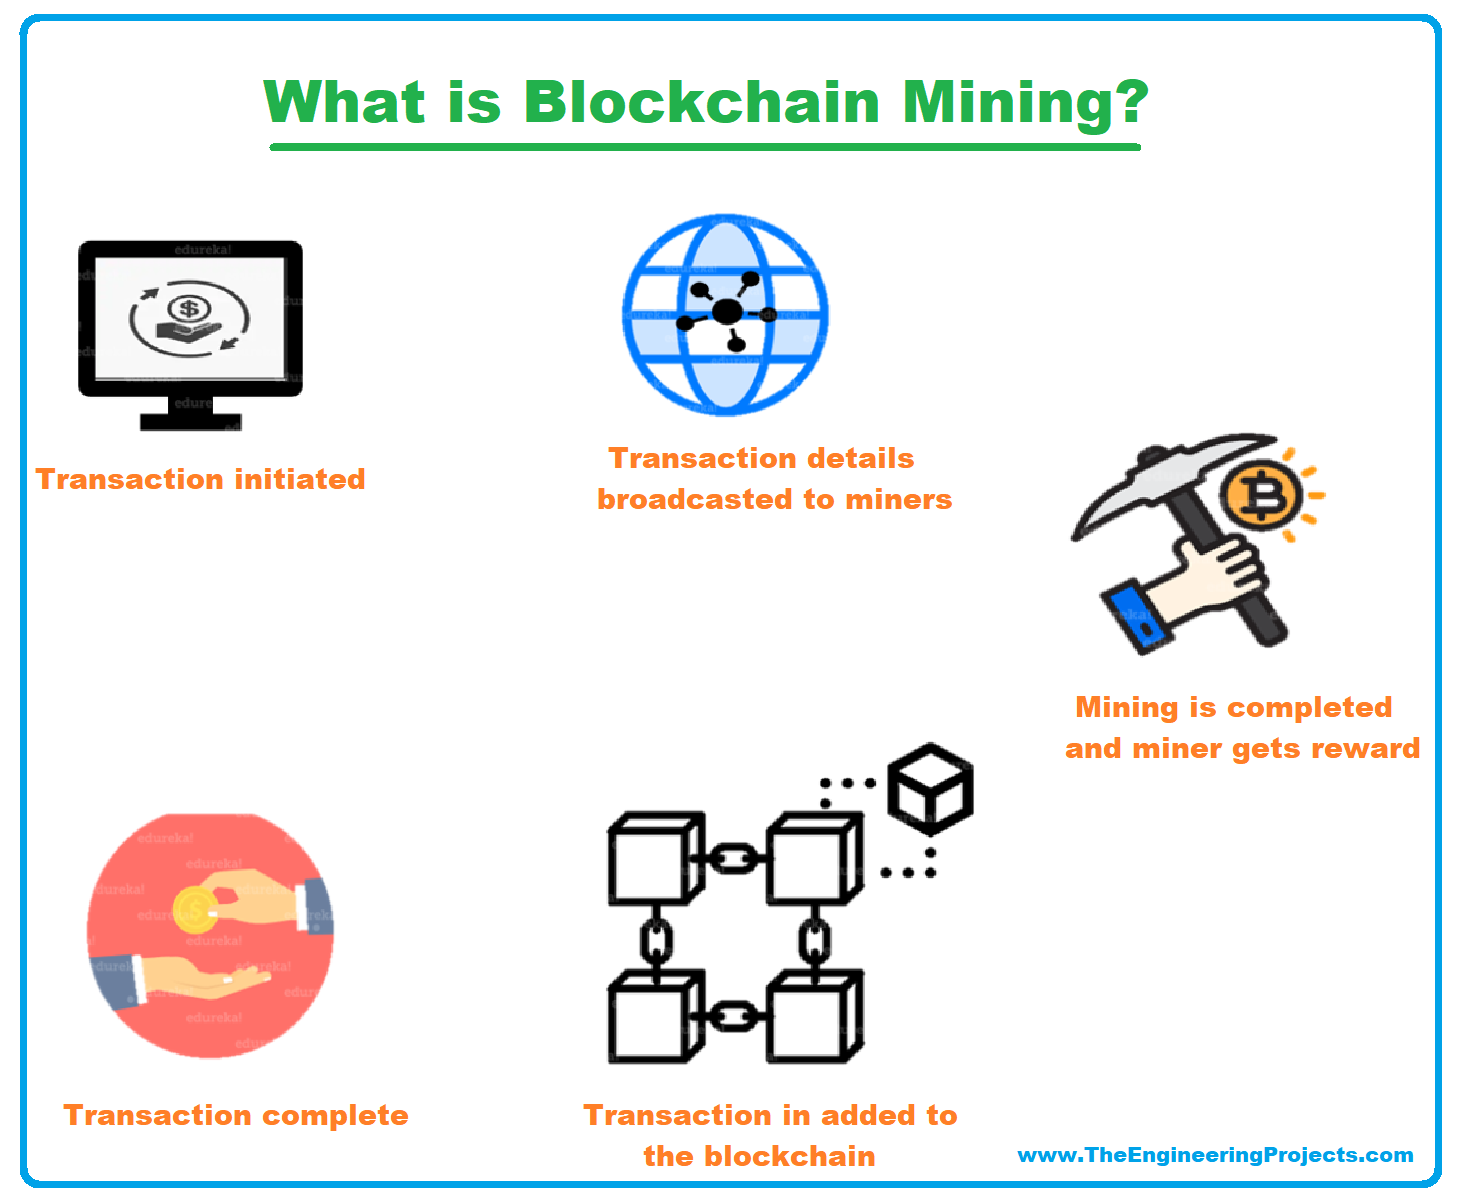 blockchain mining ltd